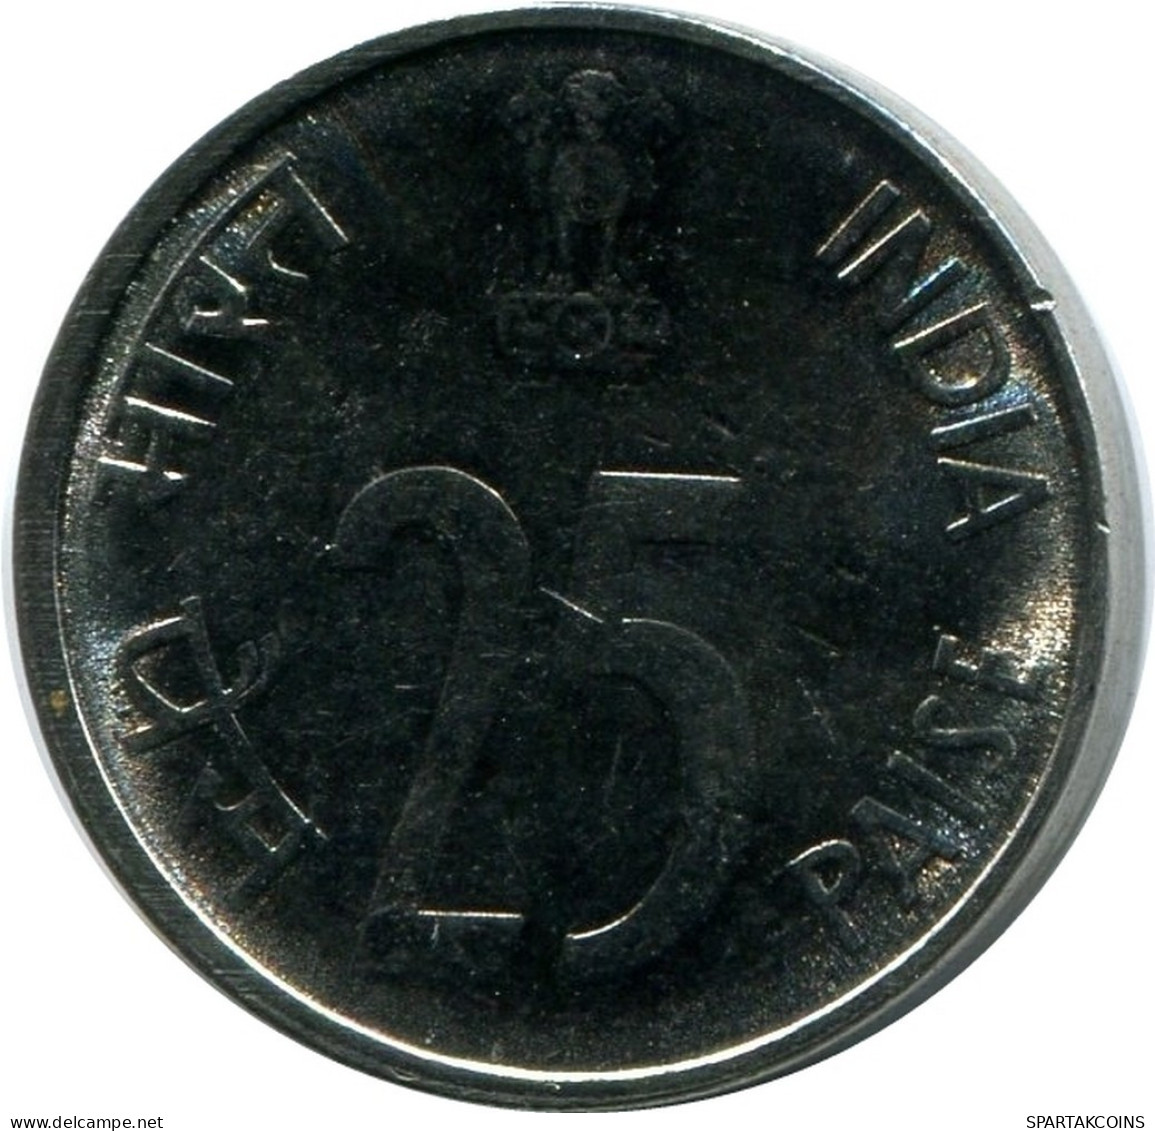 25 PAISE 1999 INDIA UNC Coin #M10086.U.A - India